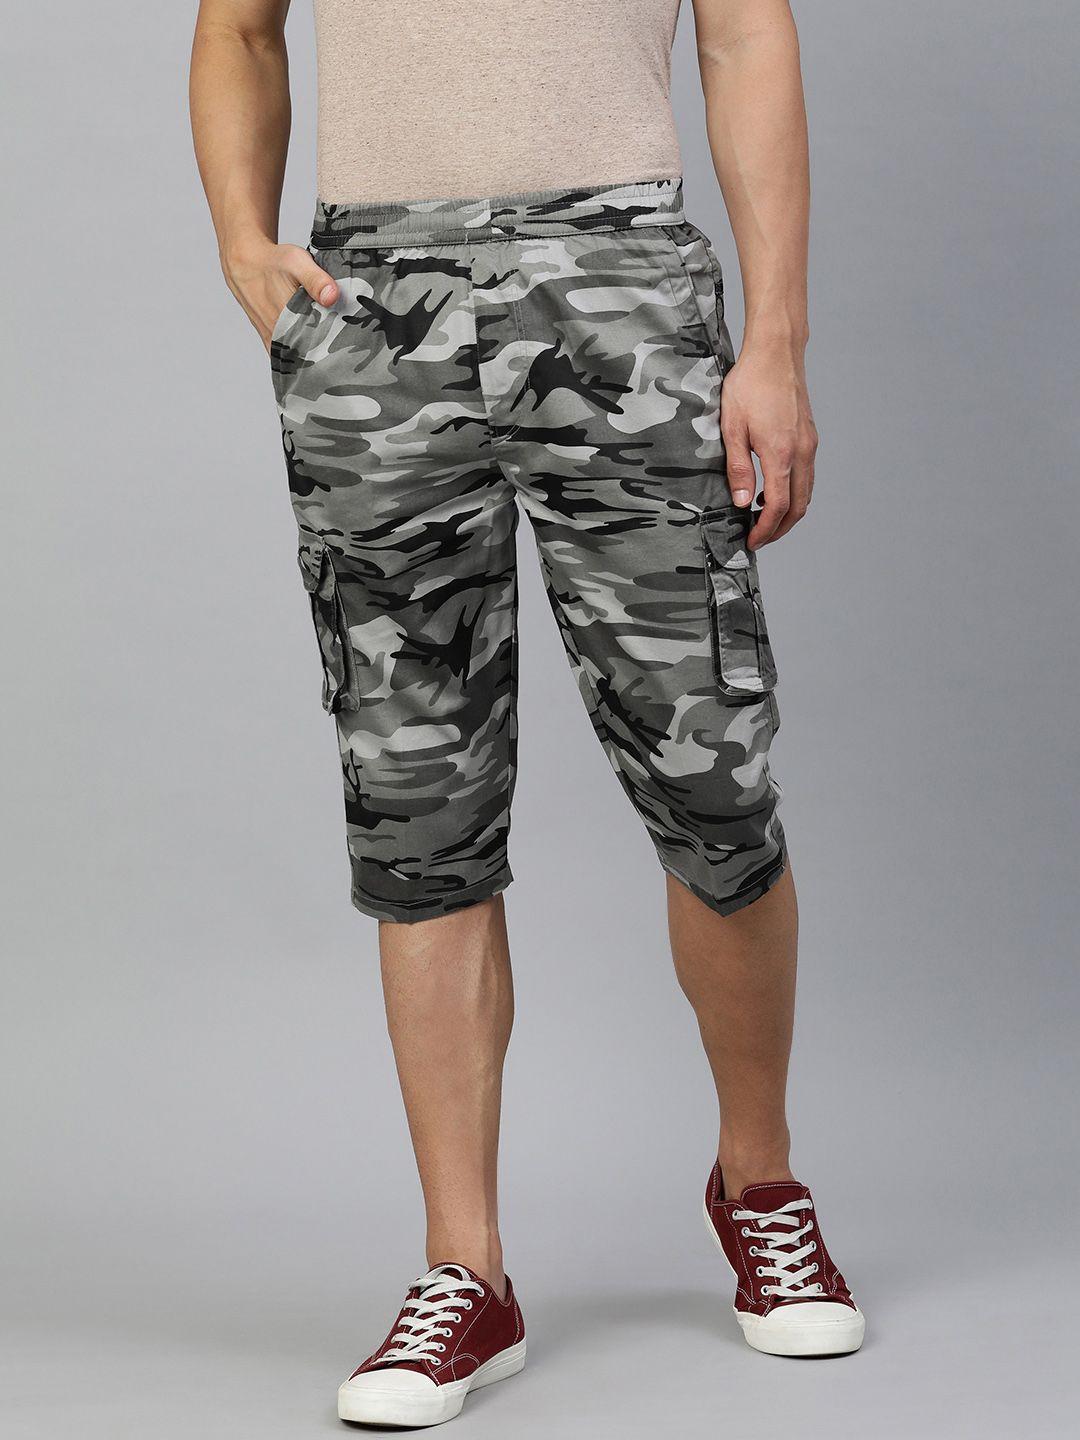 adbucks men charcoal grey & black camouflage printed pure cotton 3/4th cargo shorts